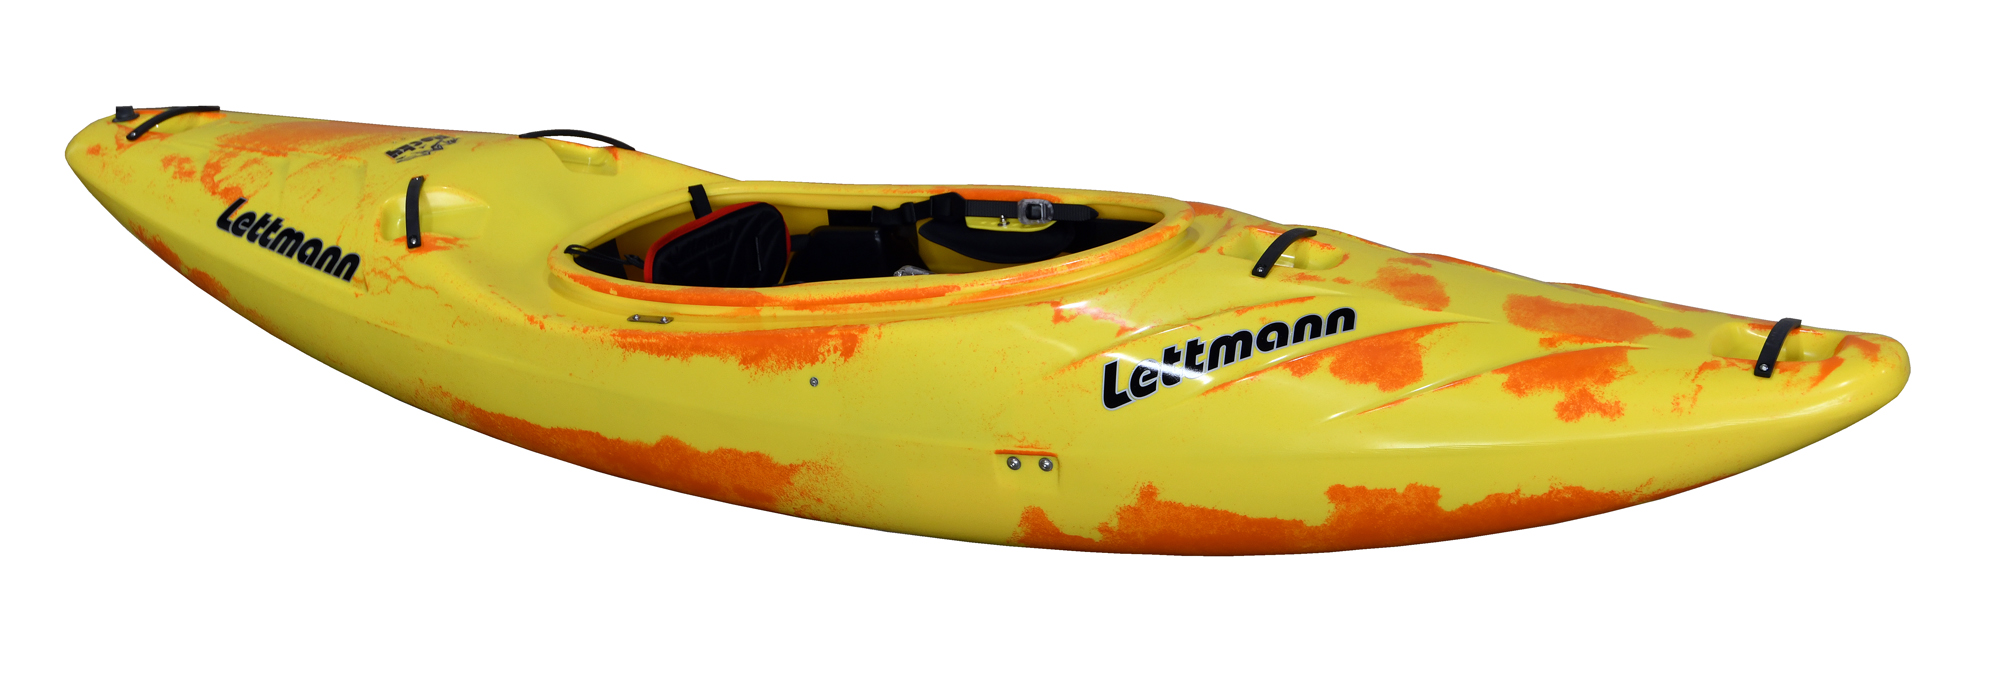 Lettmann Rocky XL Wildwasserkajak neuwertiges Testboot